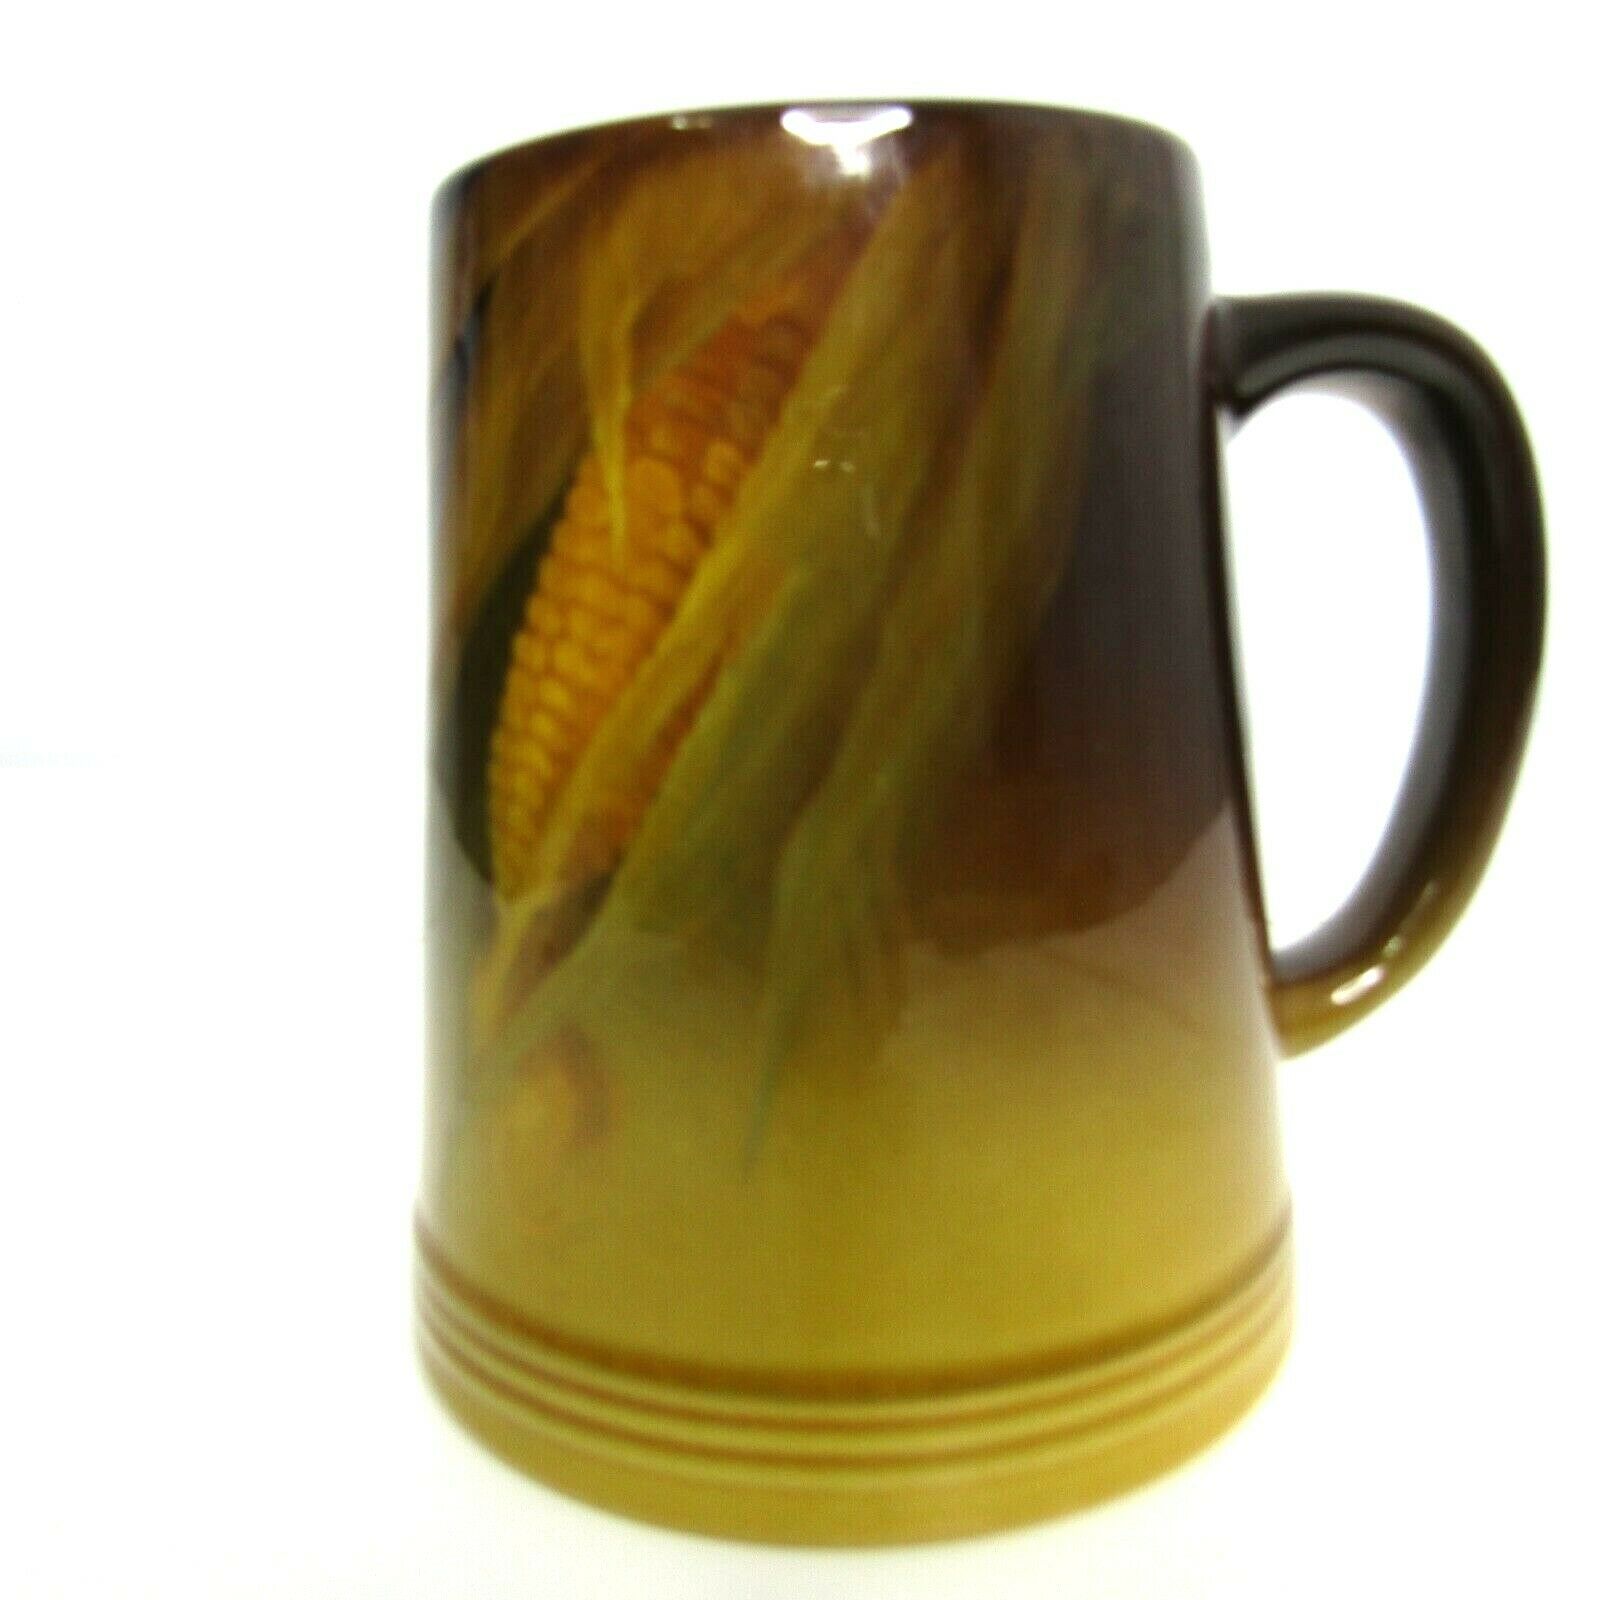 Rookwood Corn Cob Wheat Mug Stein 1899 587c Lenore Asbury Art Pottery